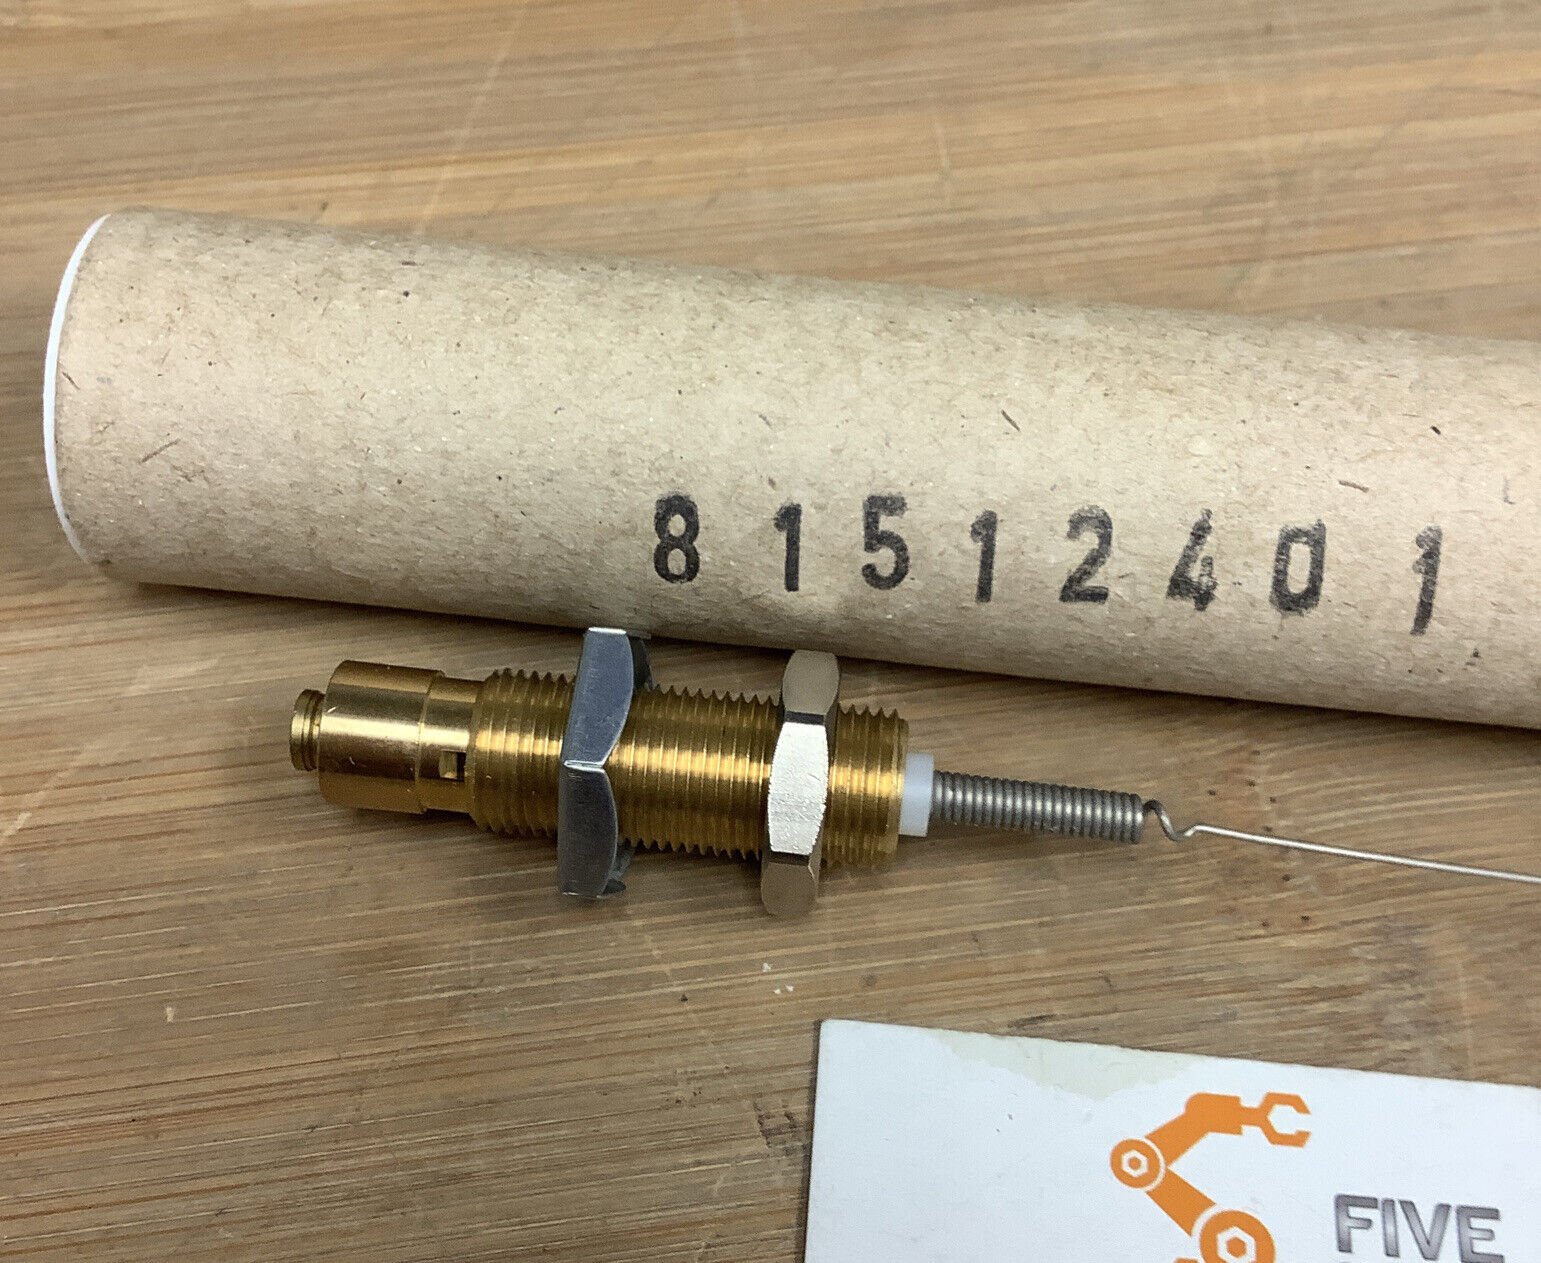 Crouzet 81512401 New Pneumatic Leak Detector / Sensor (BL127)